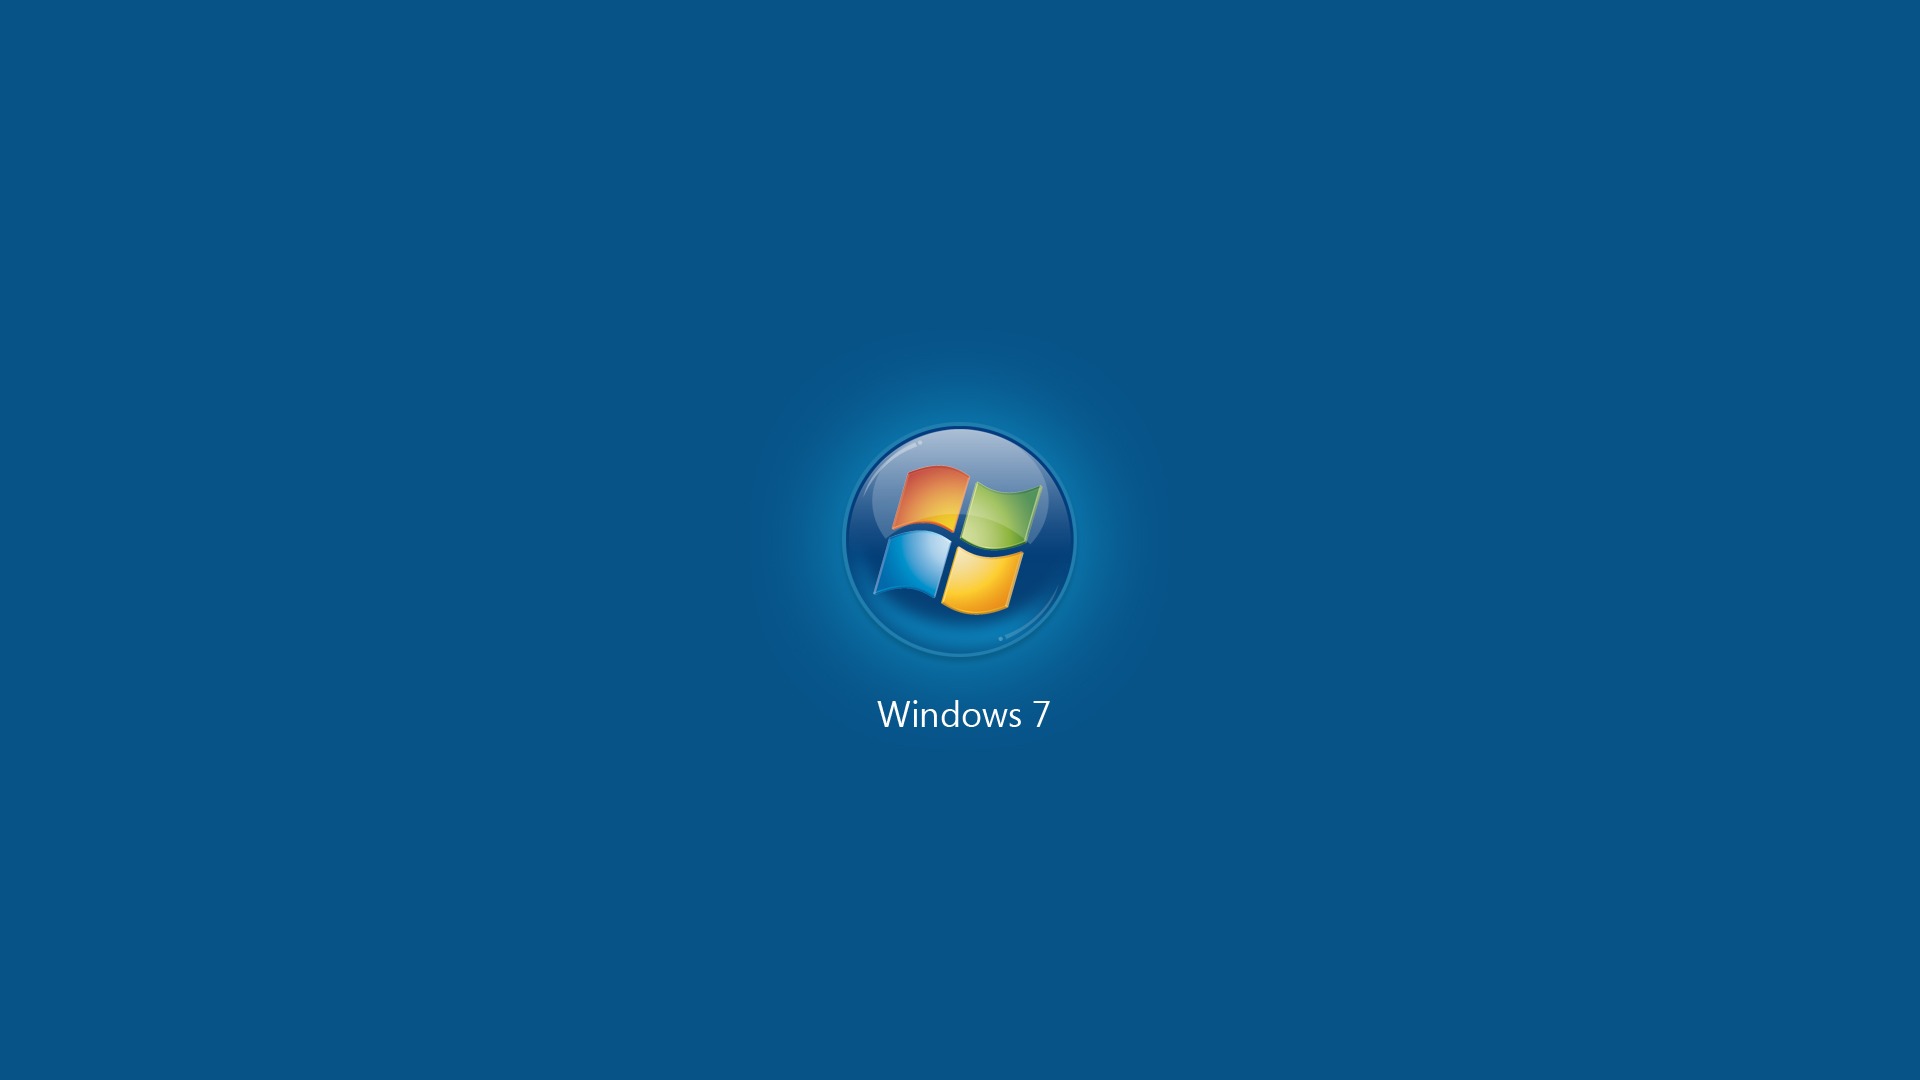 Windows7 wallpaper #25 - 1920x1080